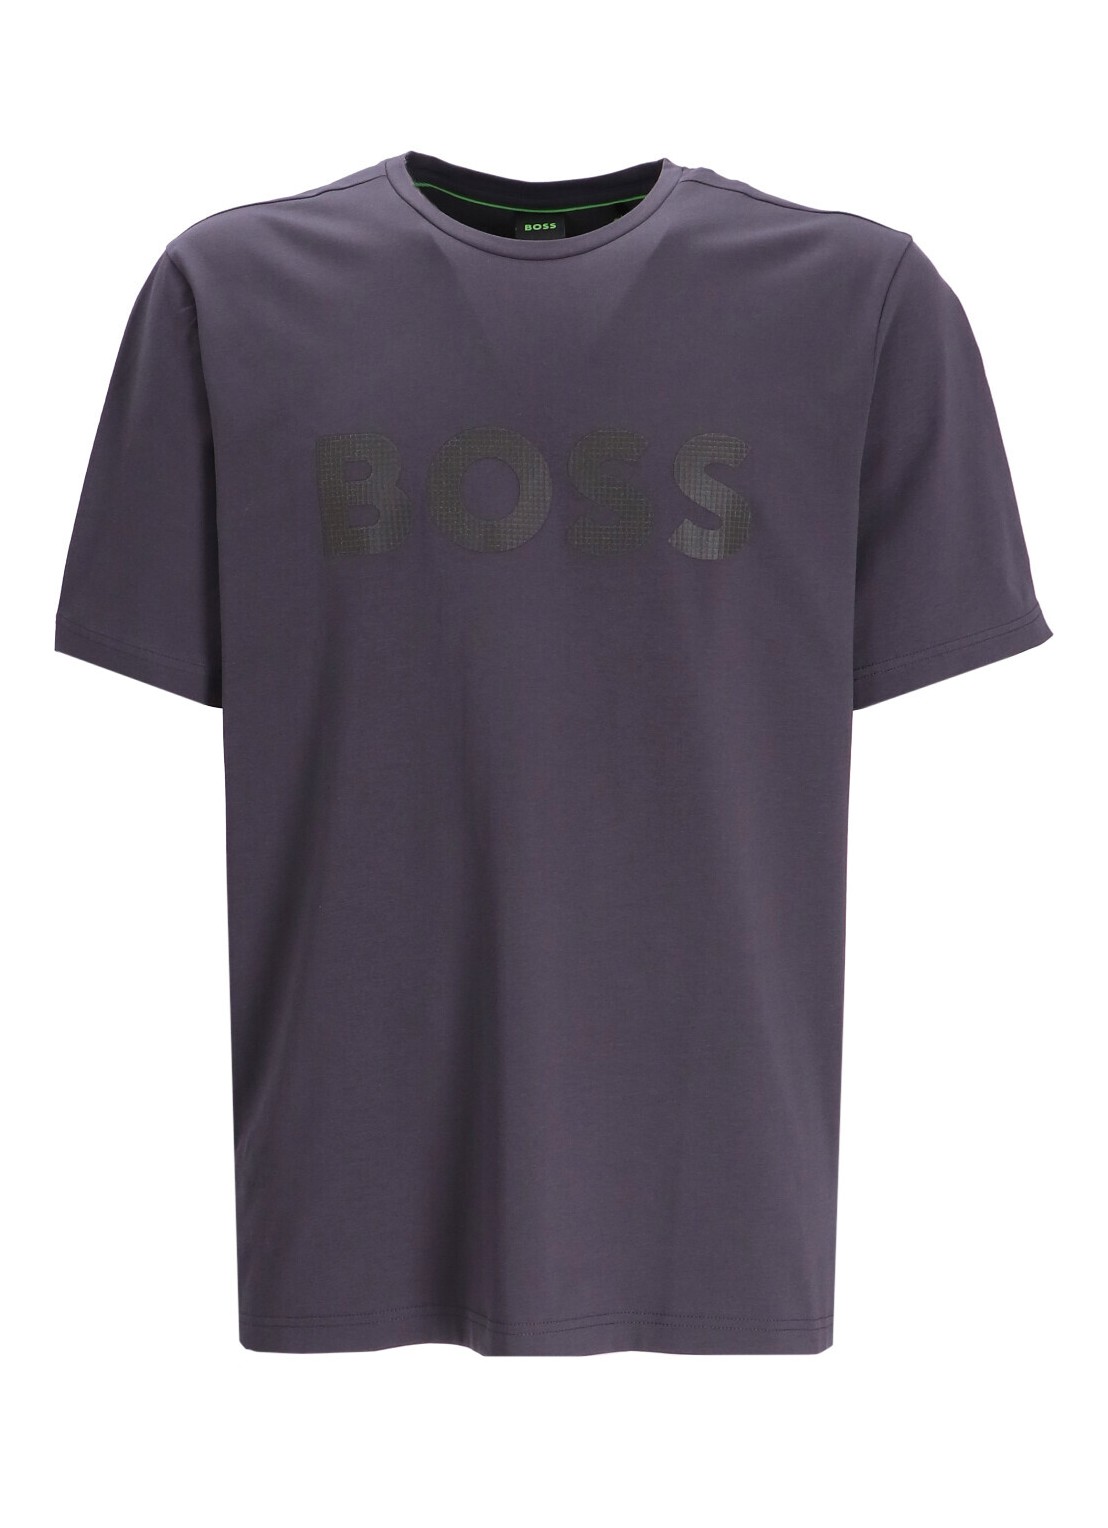 Camiseta boss t-shirt man tee 8 50501195 027 talla gris
 